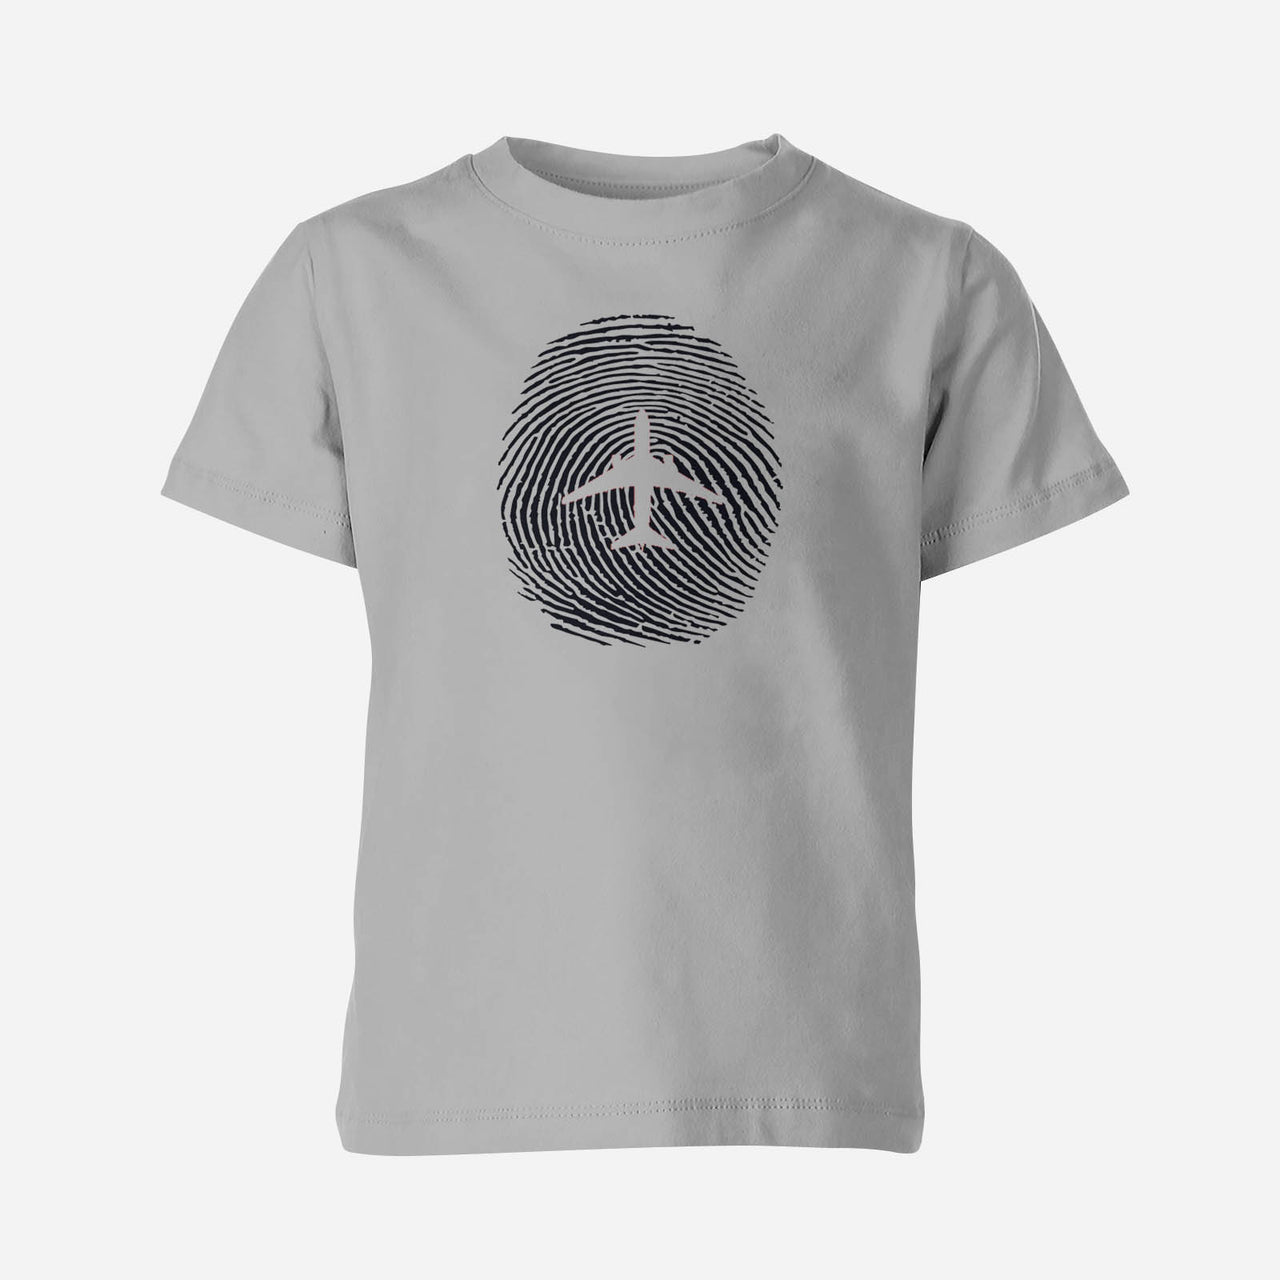 Aviation Finger Print Designed Children T-Shirts